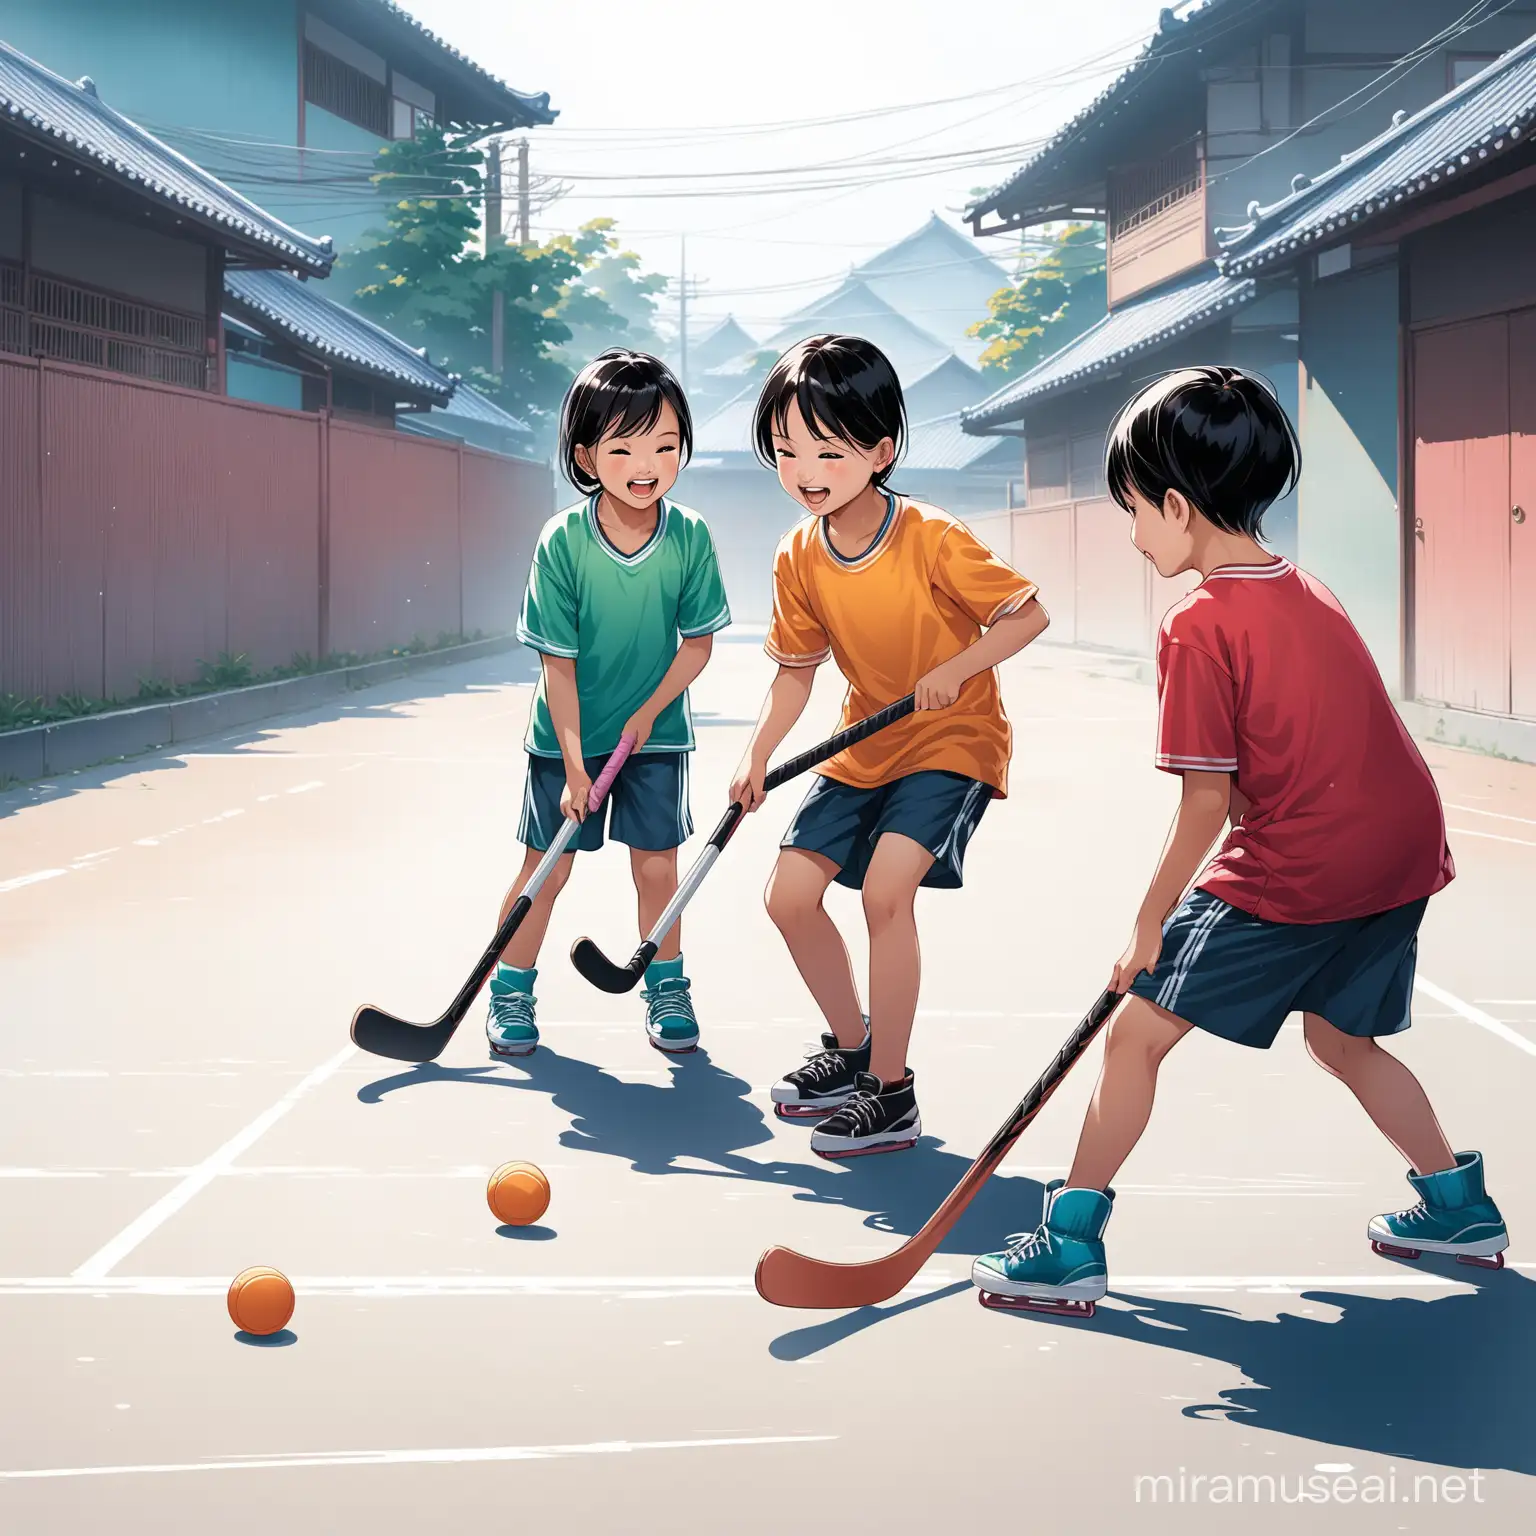 Asian children playing street hockey